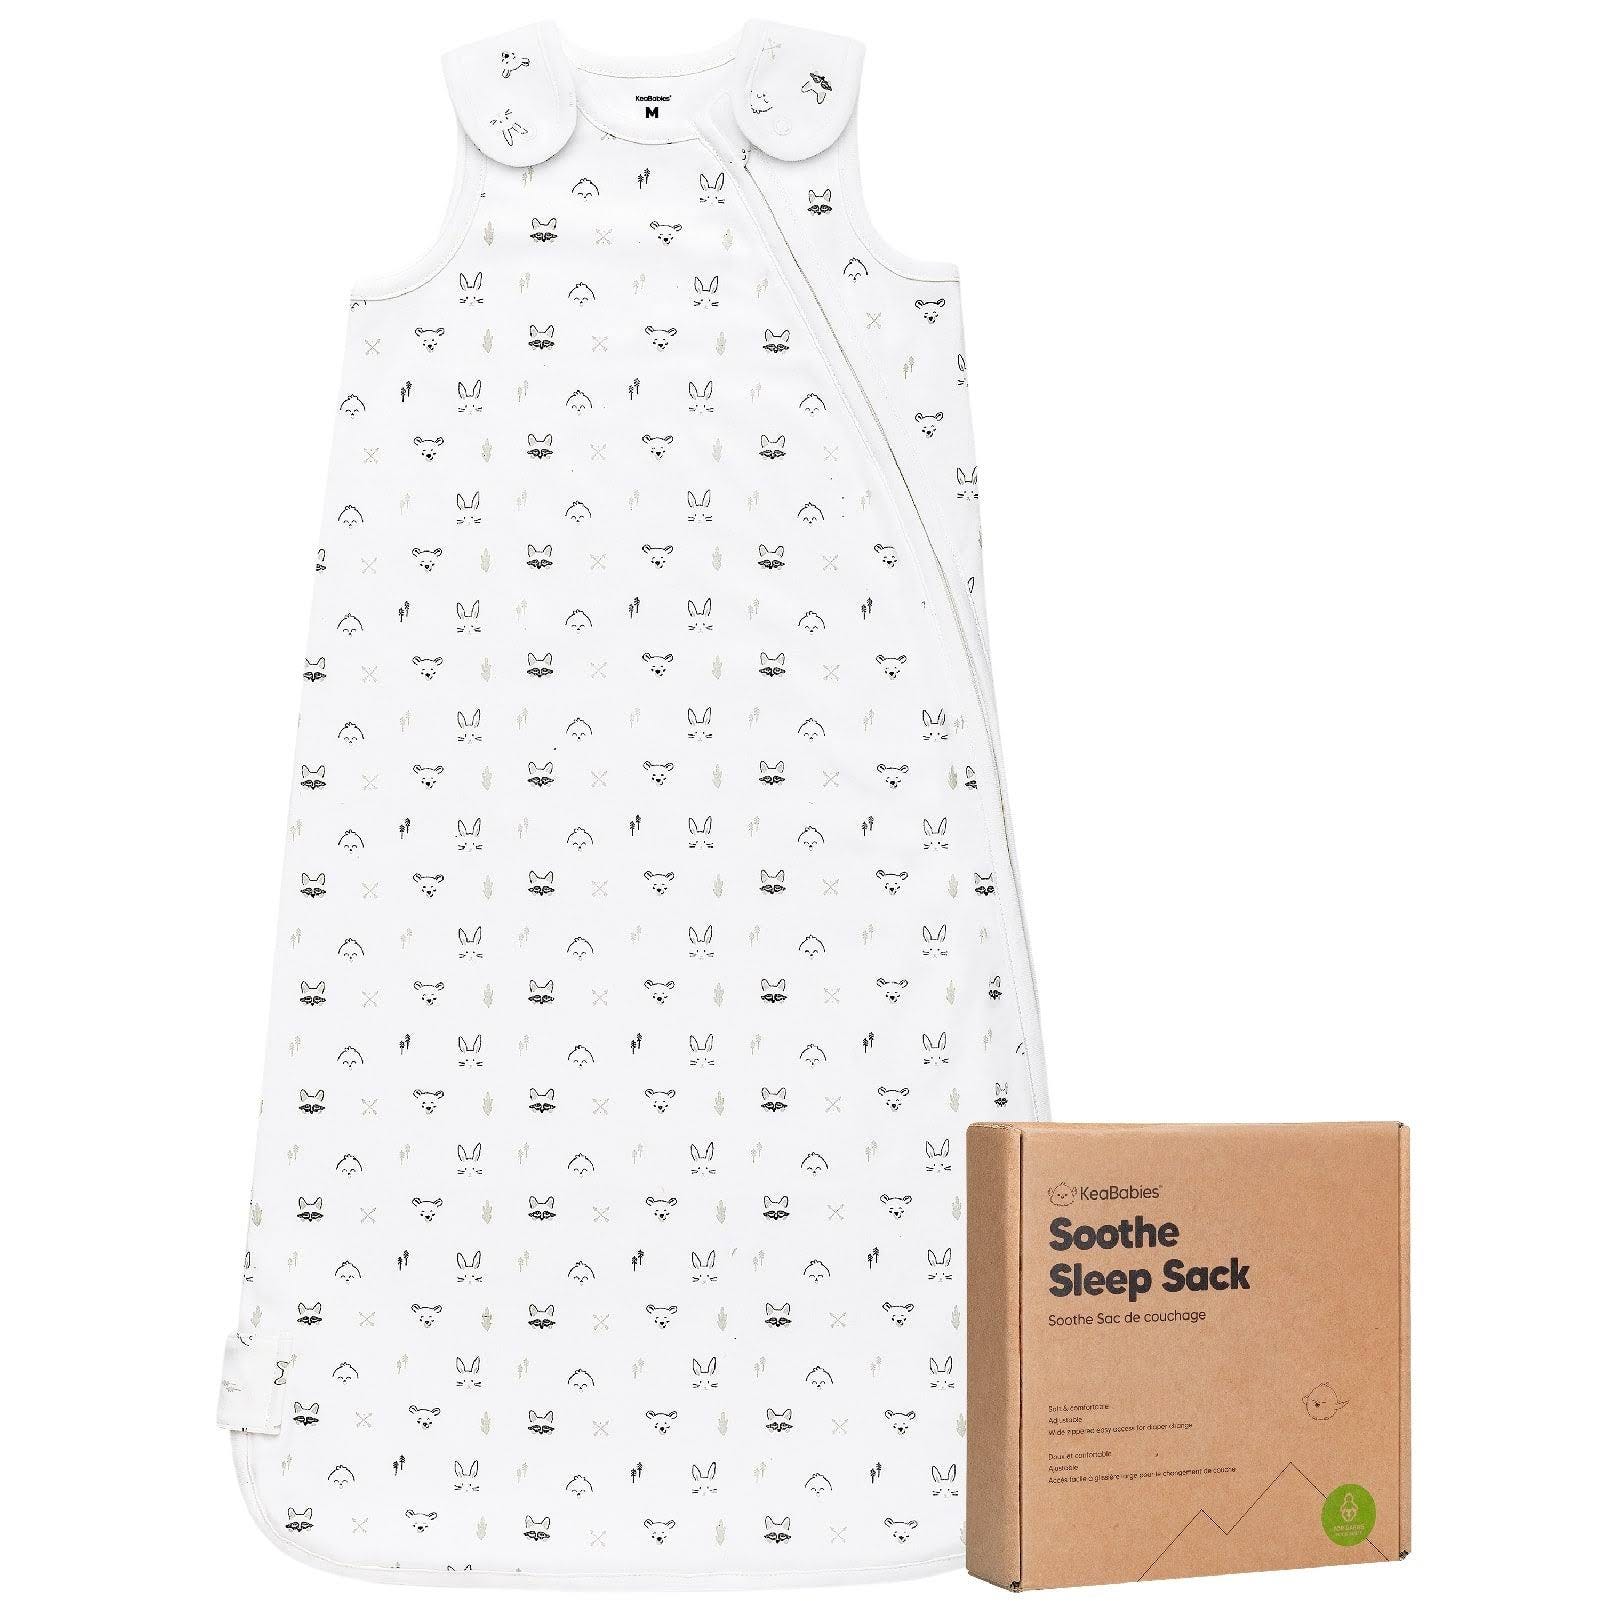 Soothe Sleep Sack: Comforting Wearable Sleeping Bag for Babies | Image